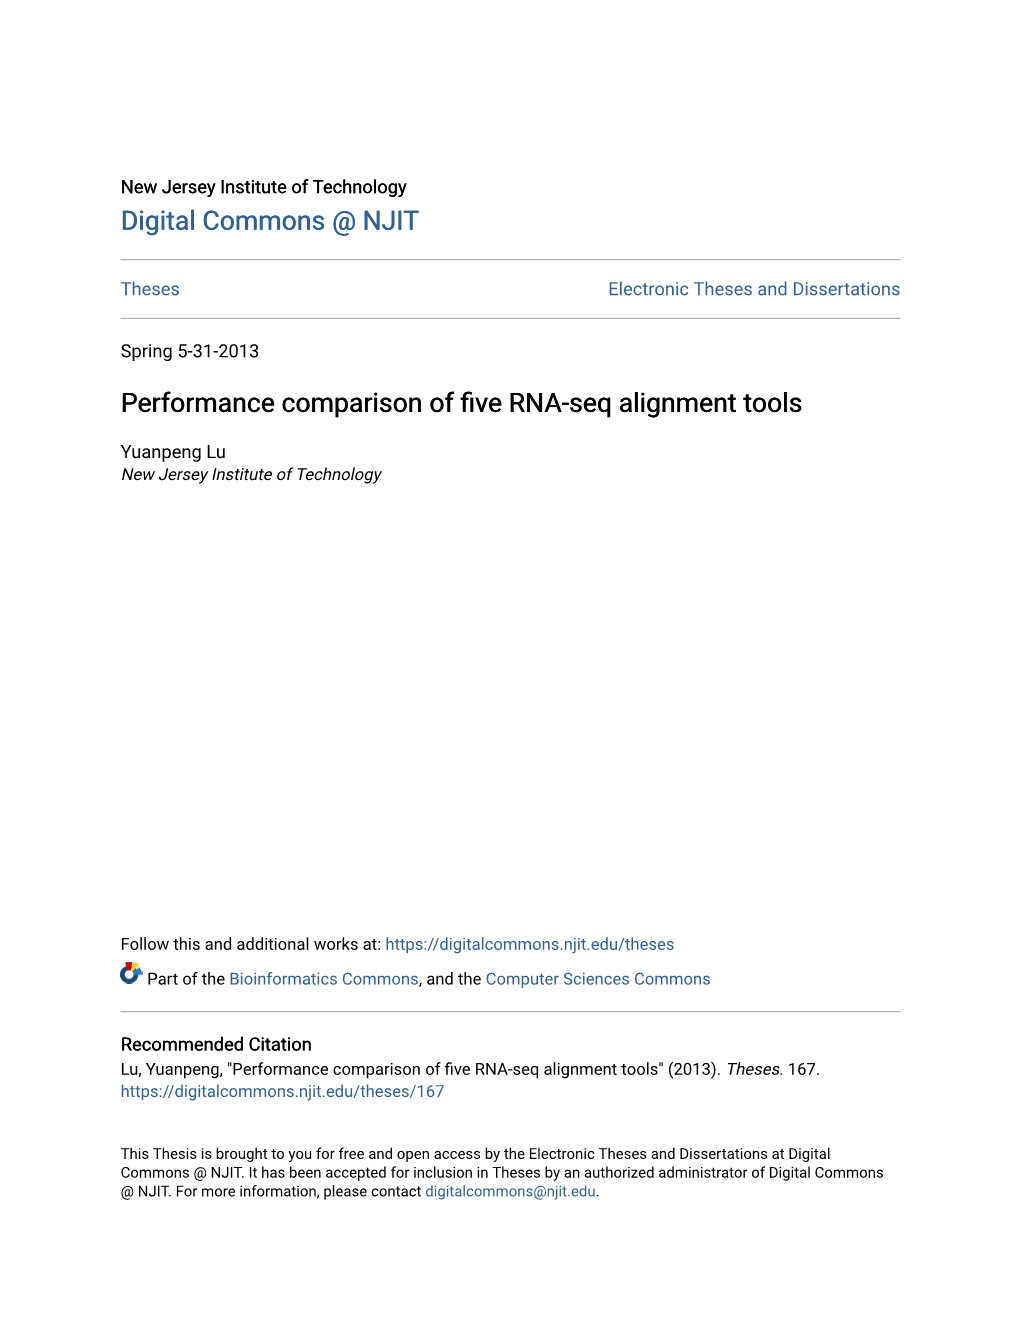 Performance Comparison of Five RNA-Seq Alignment Tools